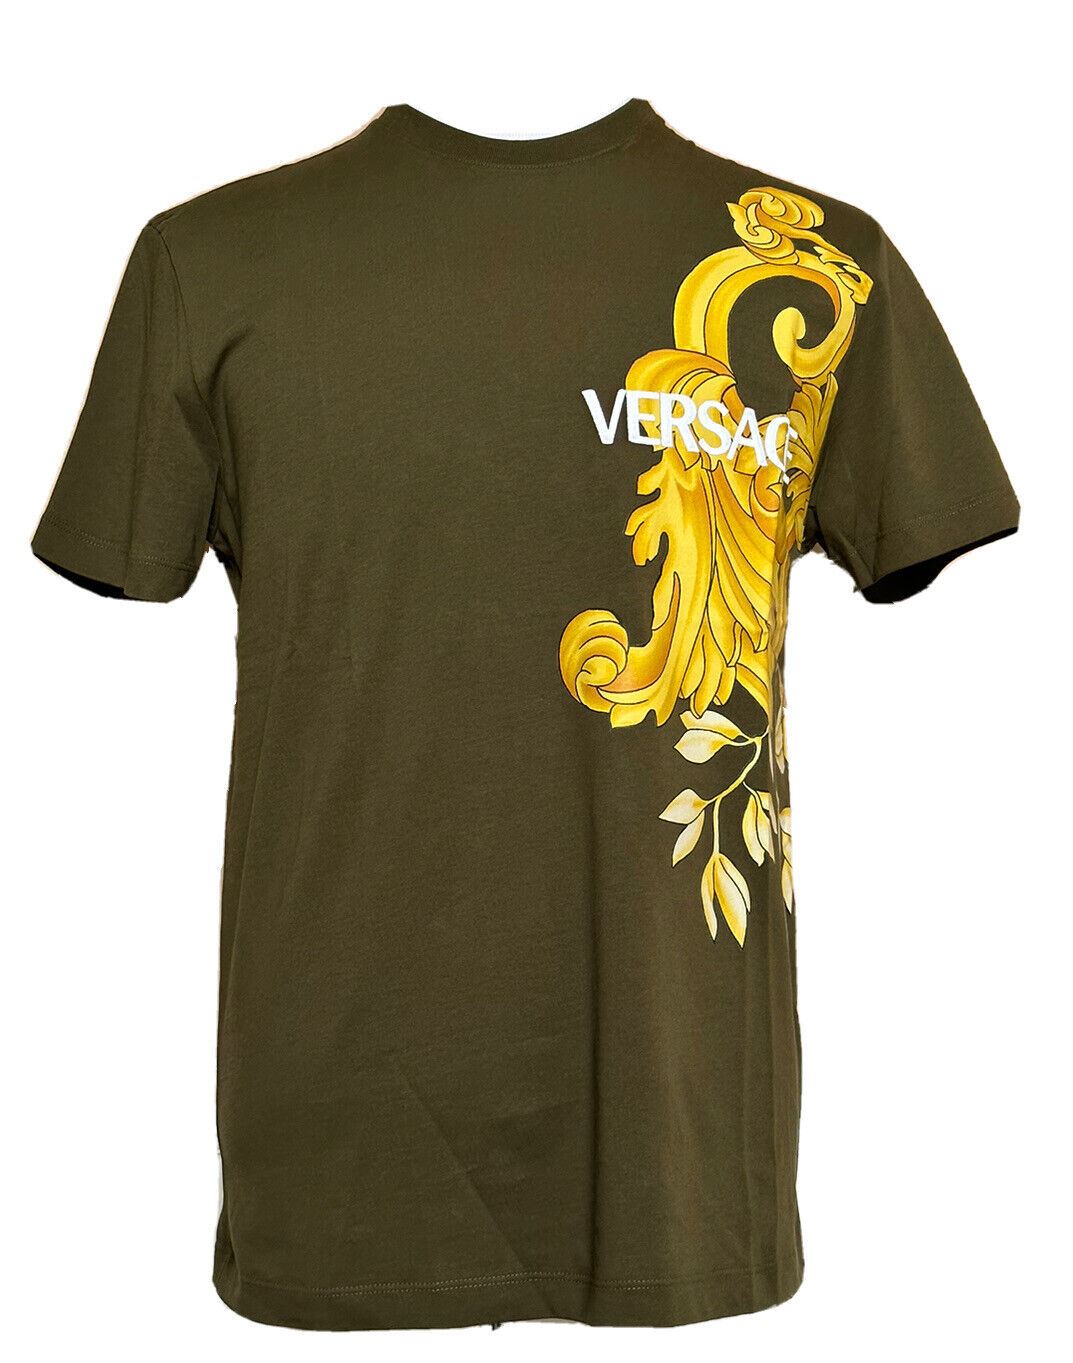 NWT Versace Футболка из джерси цвета хаки с вышитым логотипом Versace, 2XL 1008280